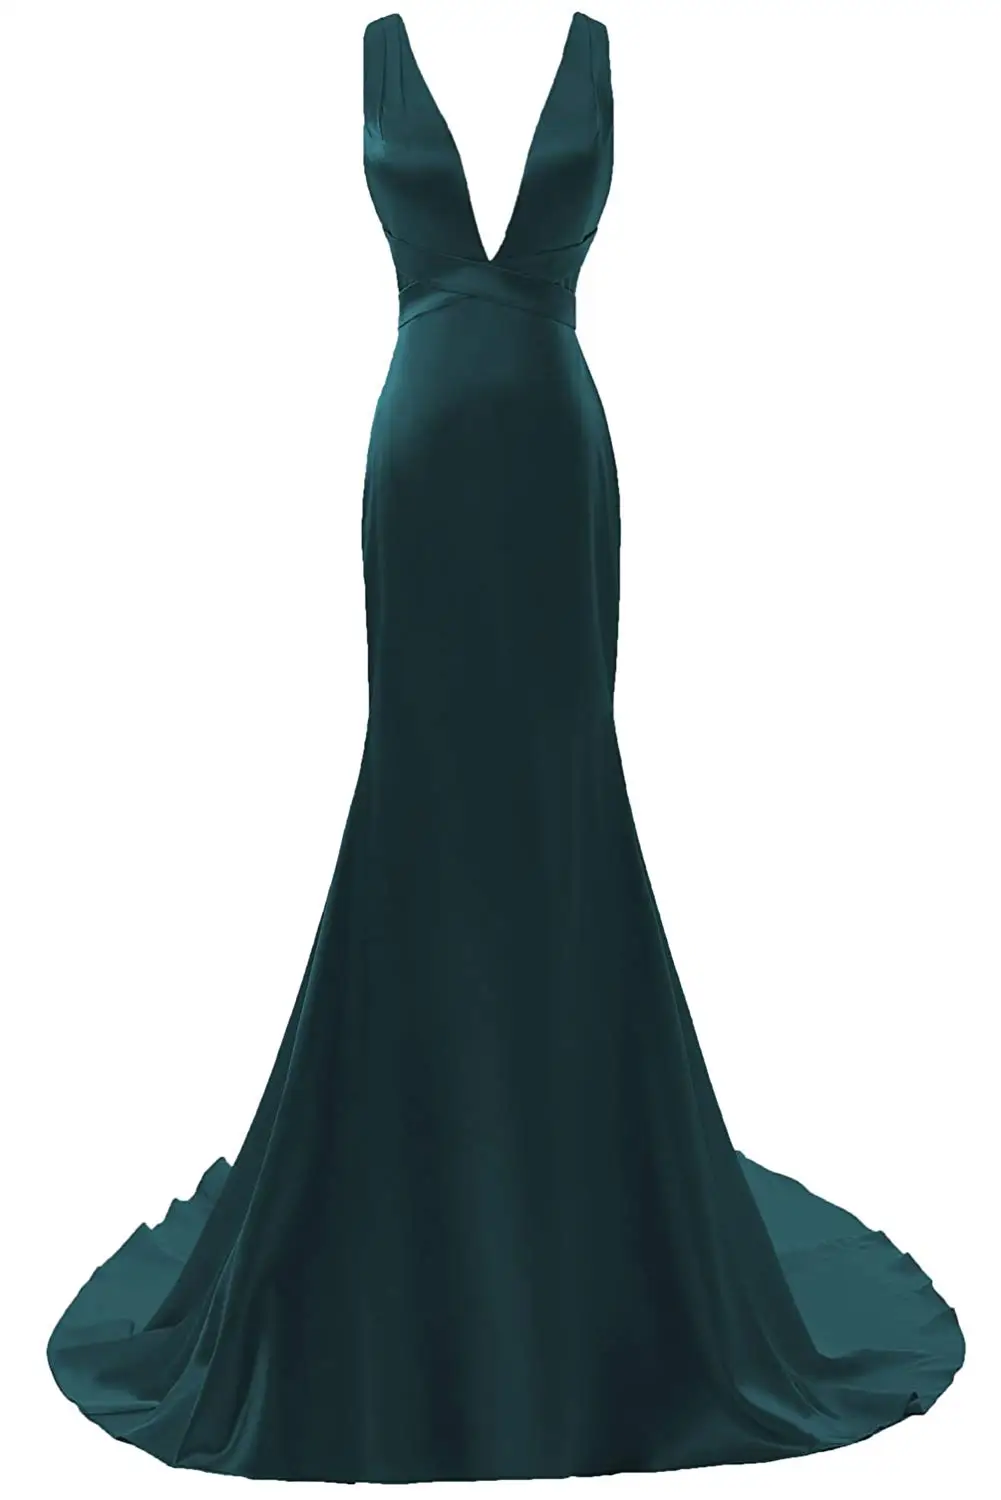 Cheap Mermiad Dress, find Mermiad Dress deals on line at Alibaba.com